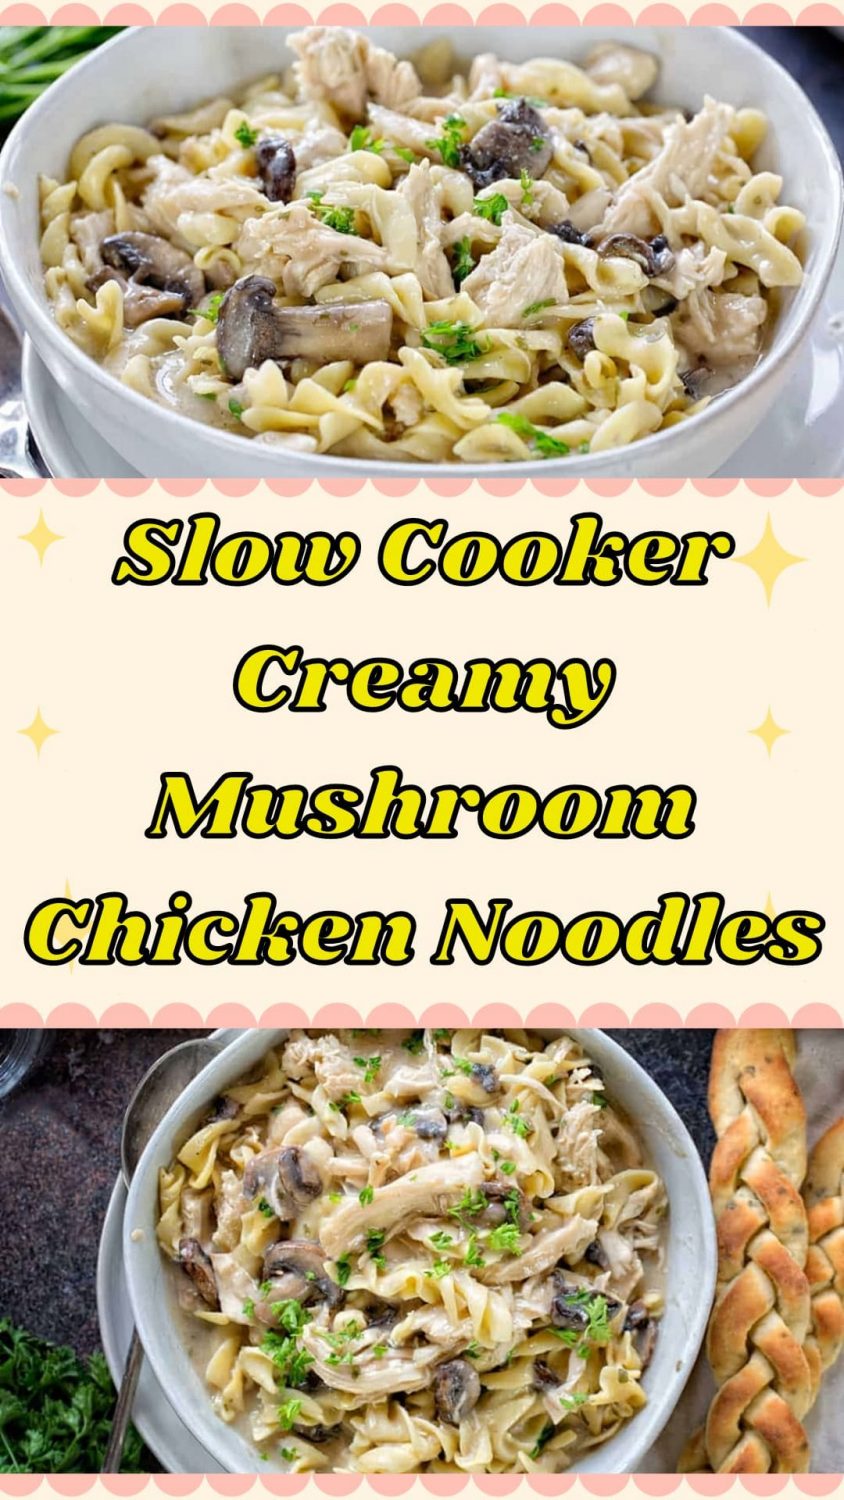 Slow Cooker Creamy Mushroom Chicken Noodles